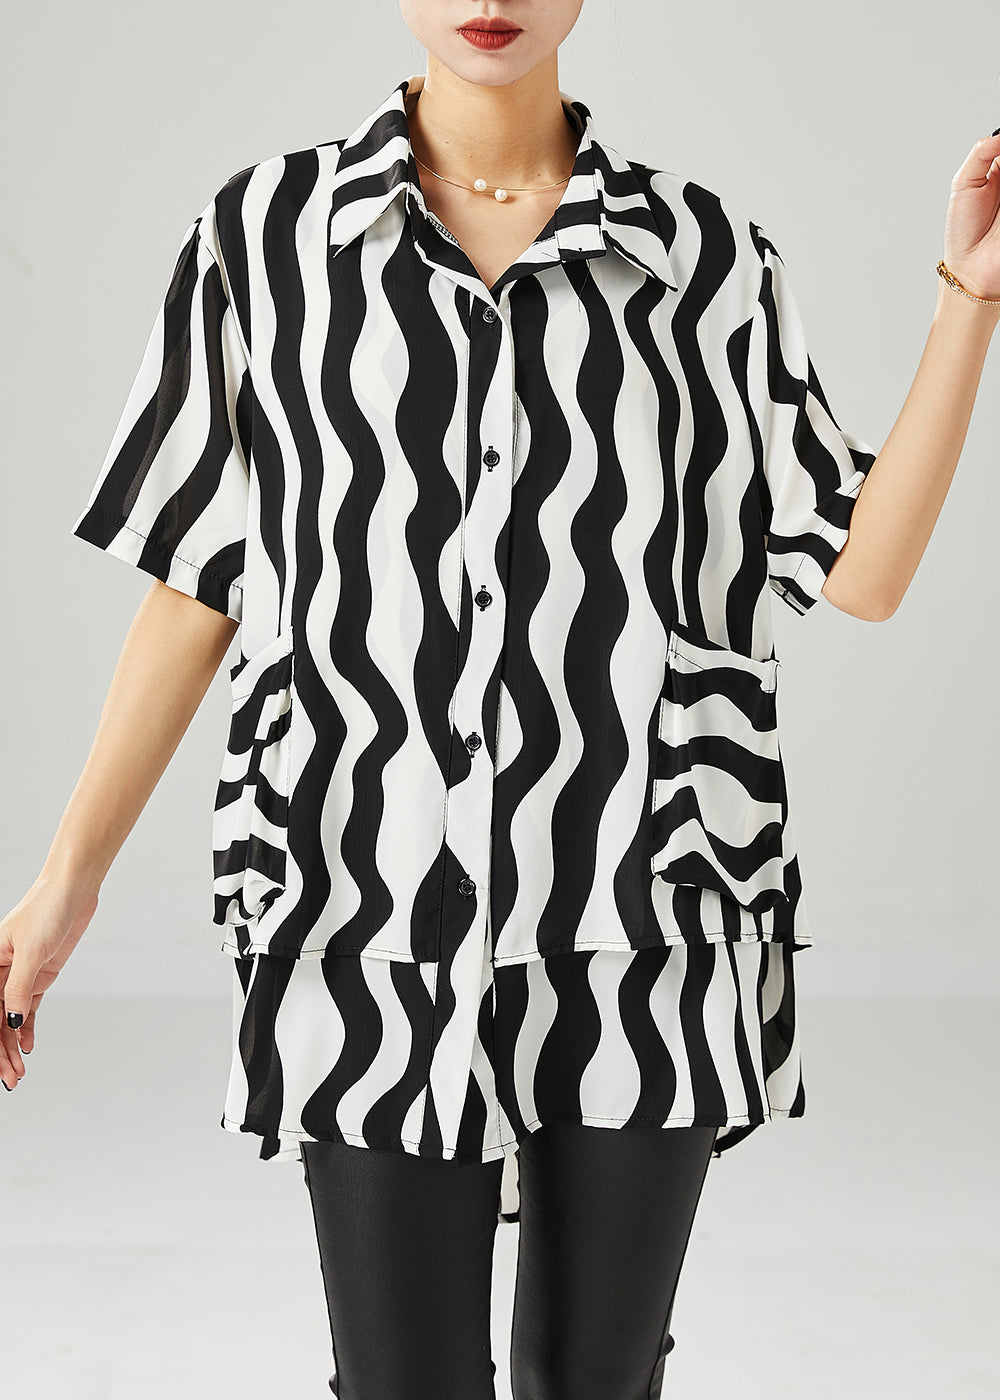 Black Wave Striped Spandex Shirts Oversized Summer